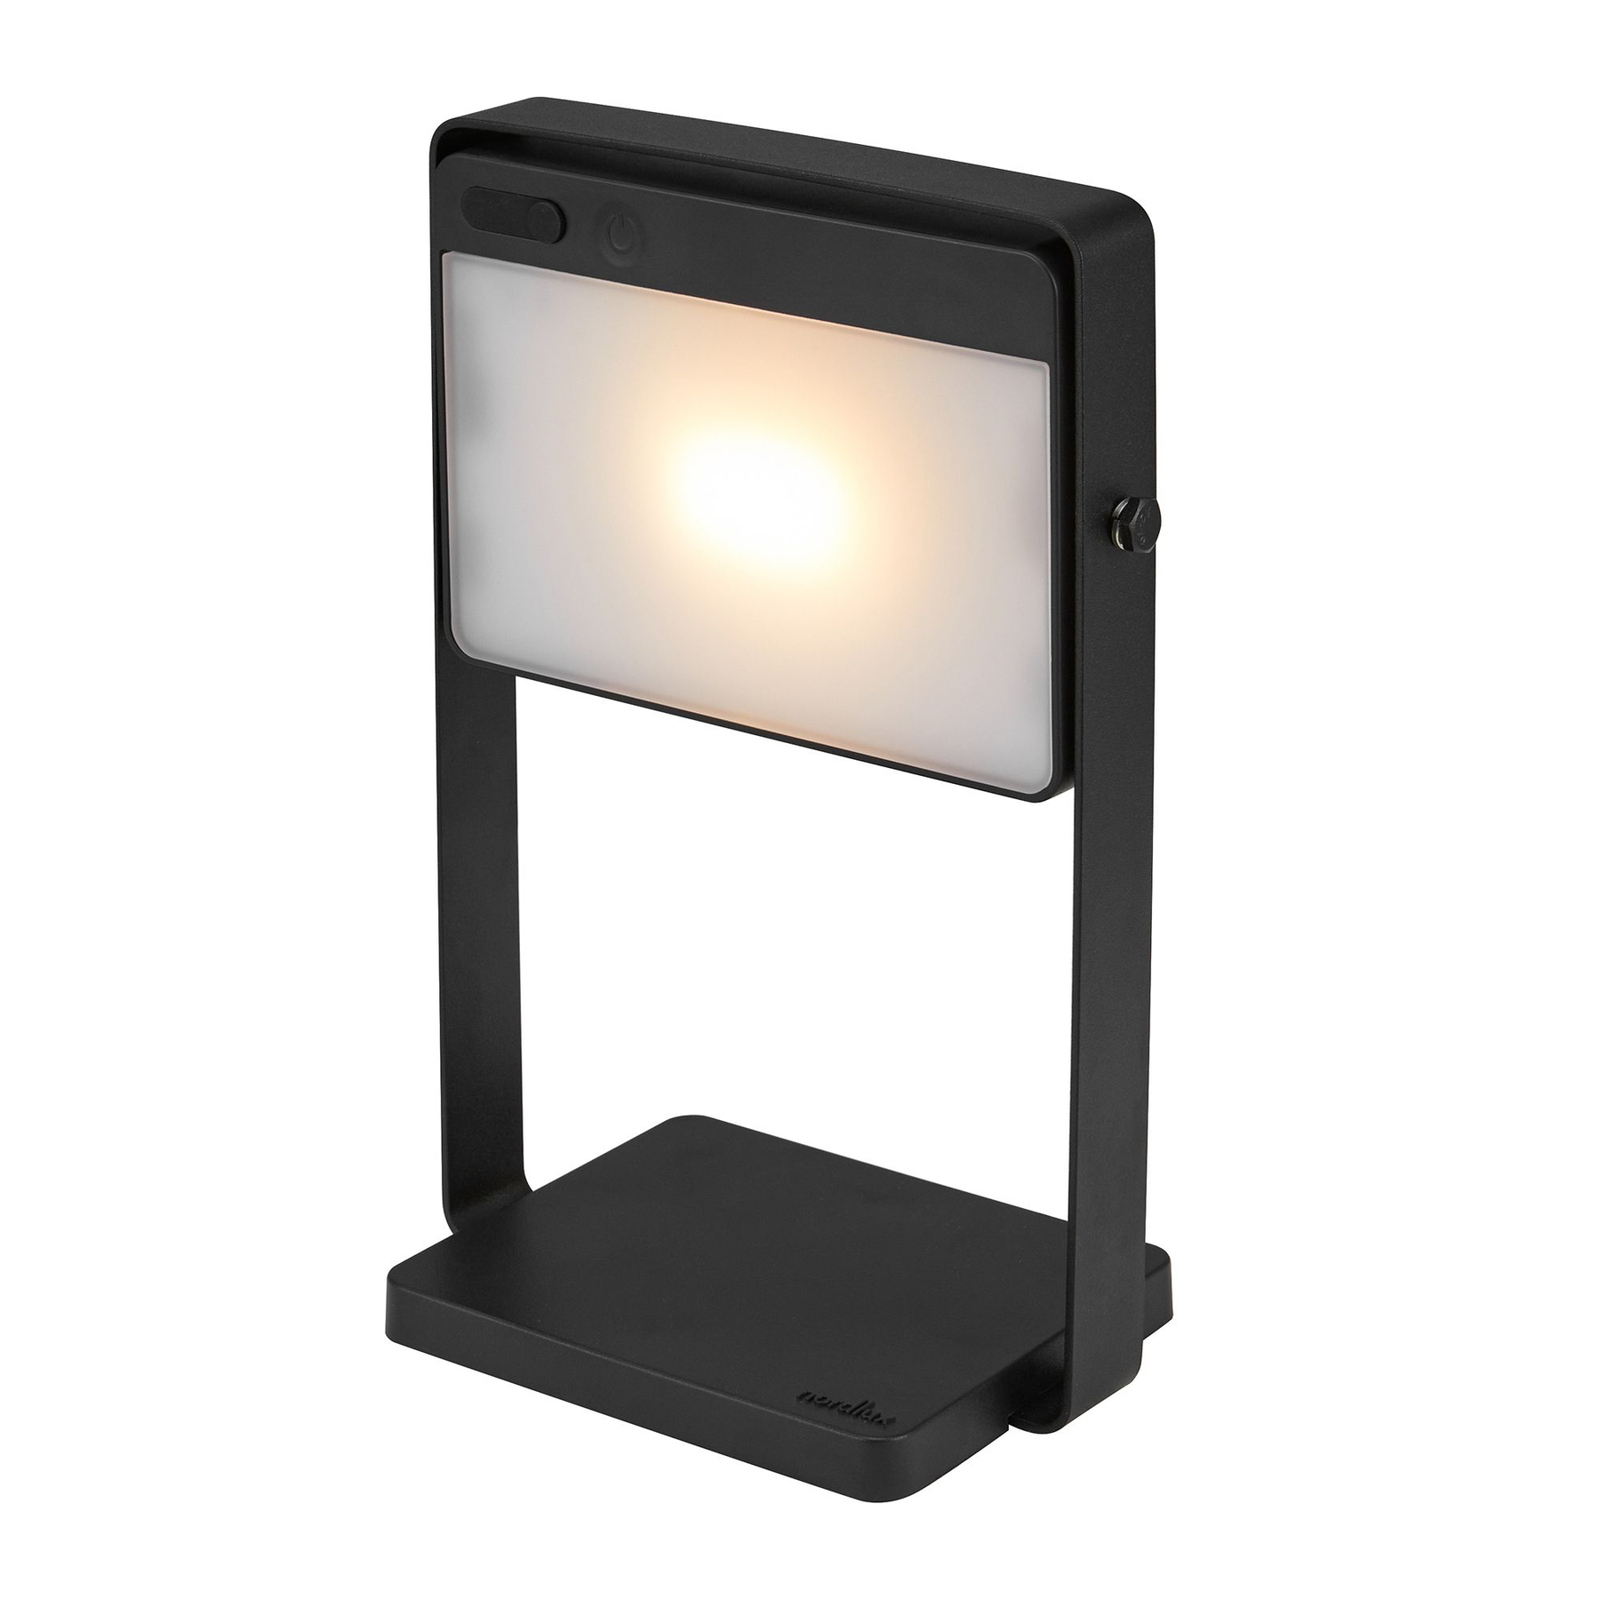 Saulio LED ηλιακό επιτραπέζιο φωτιστικό, μαύρο, IP44, αλουμίνιο, USB,